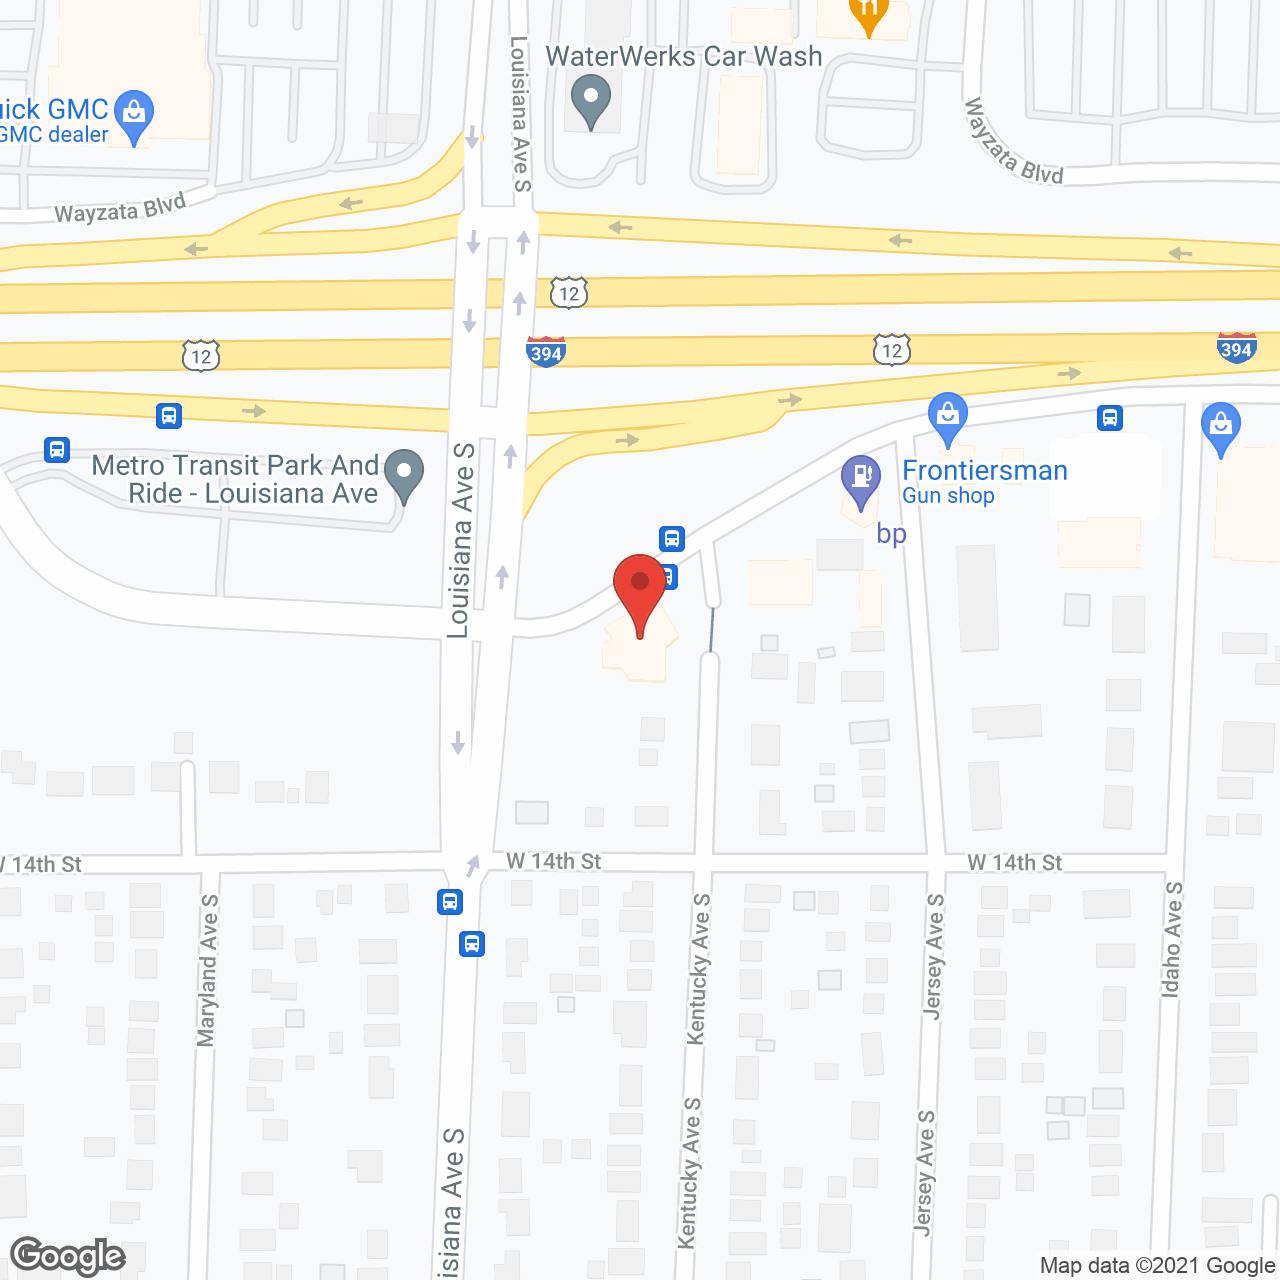 Comfort Residence Saint Louis Park in google map